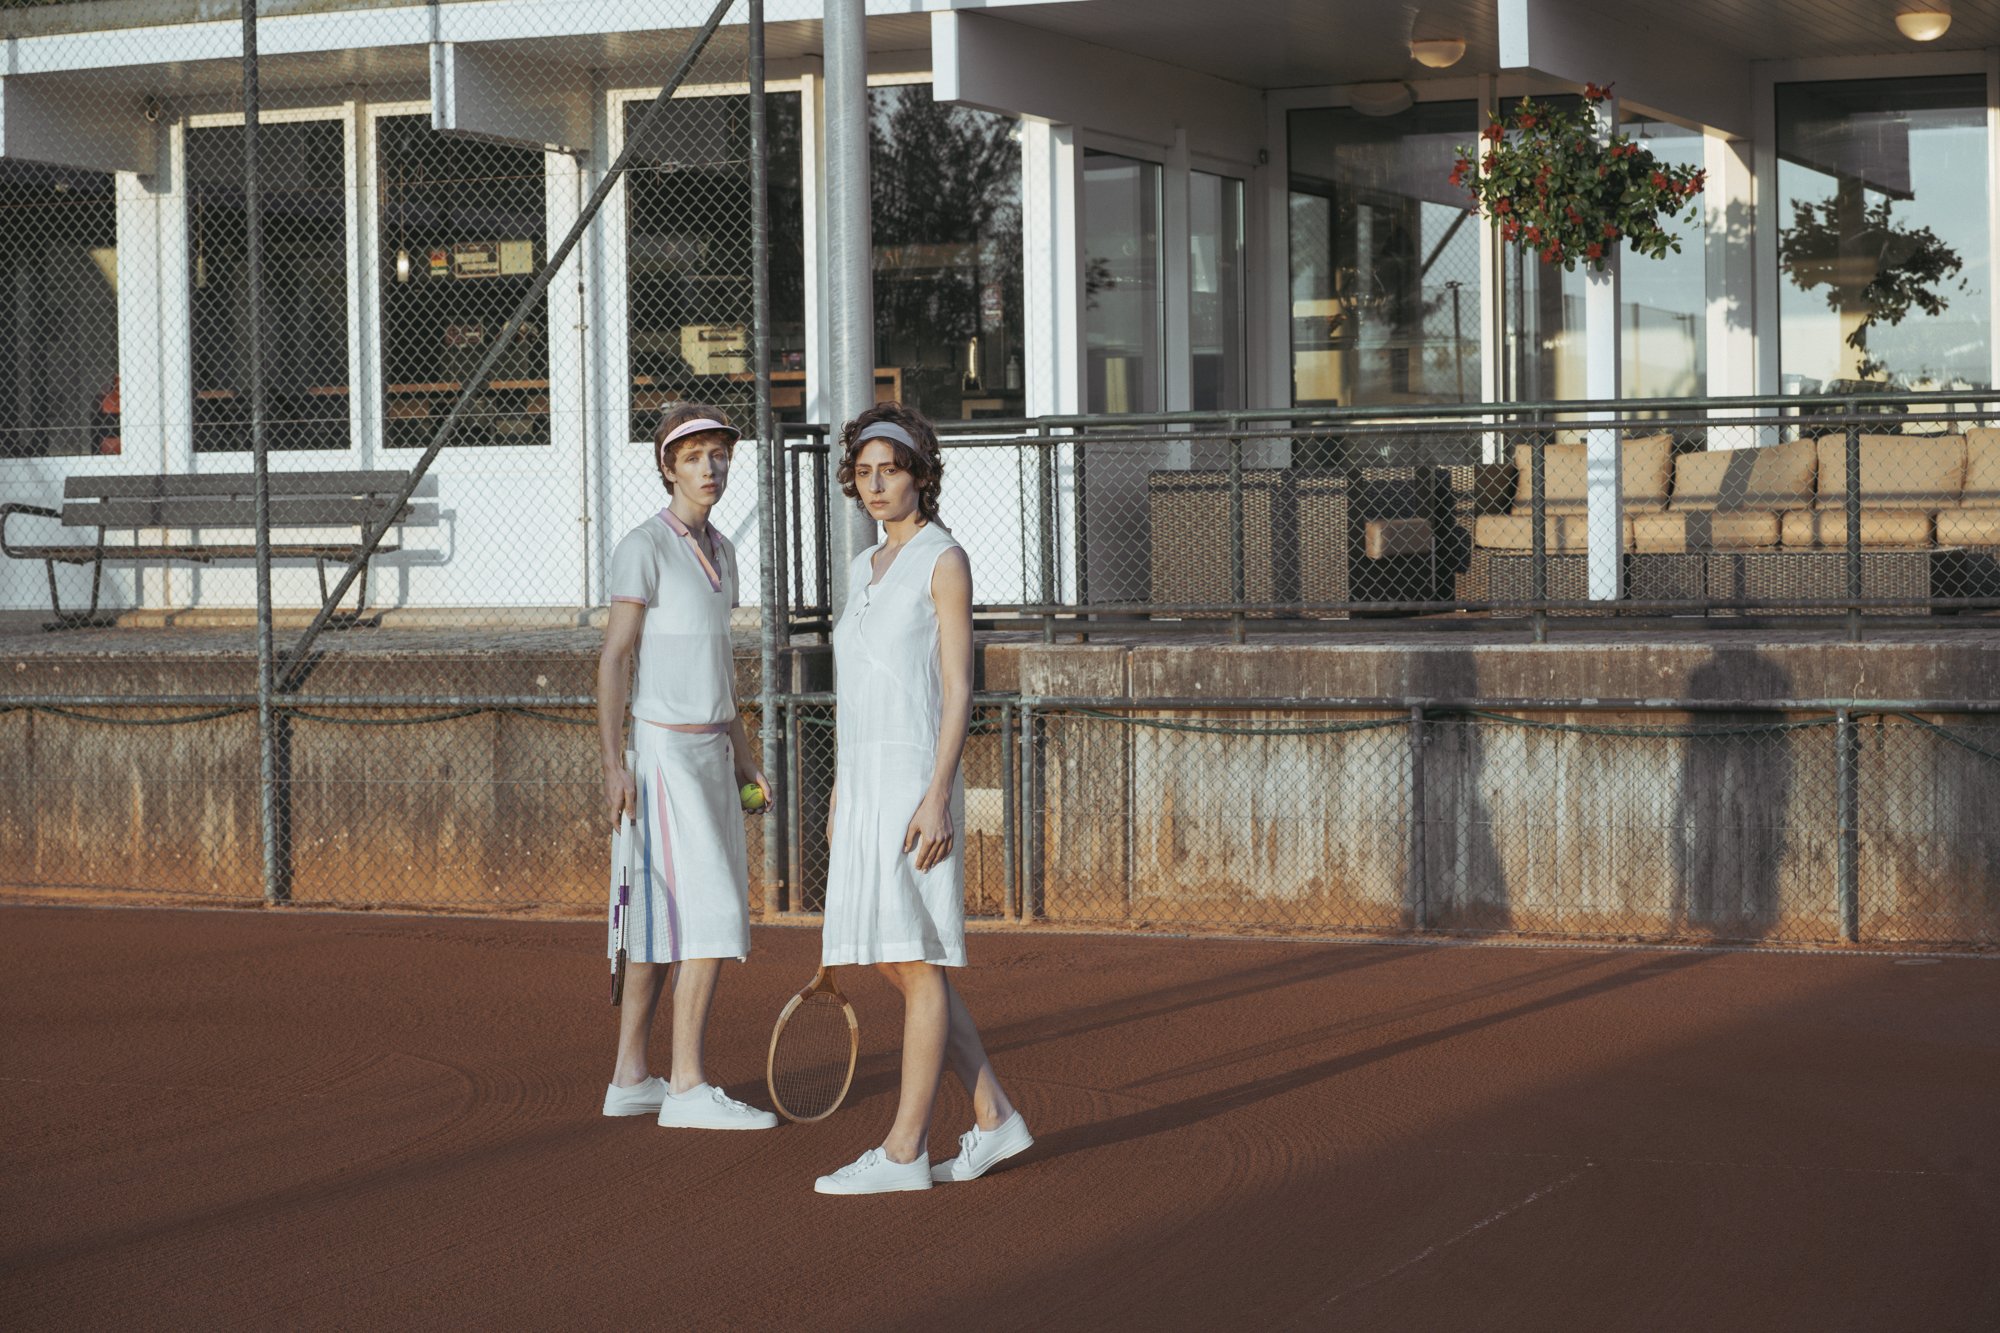 Zsofia_Daniel-Tennis-players-2.jpg